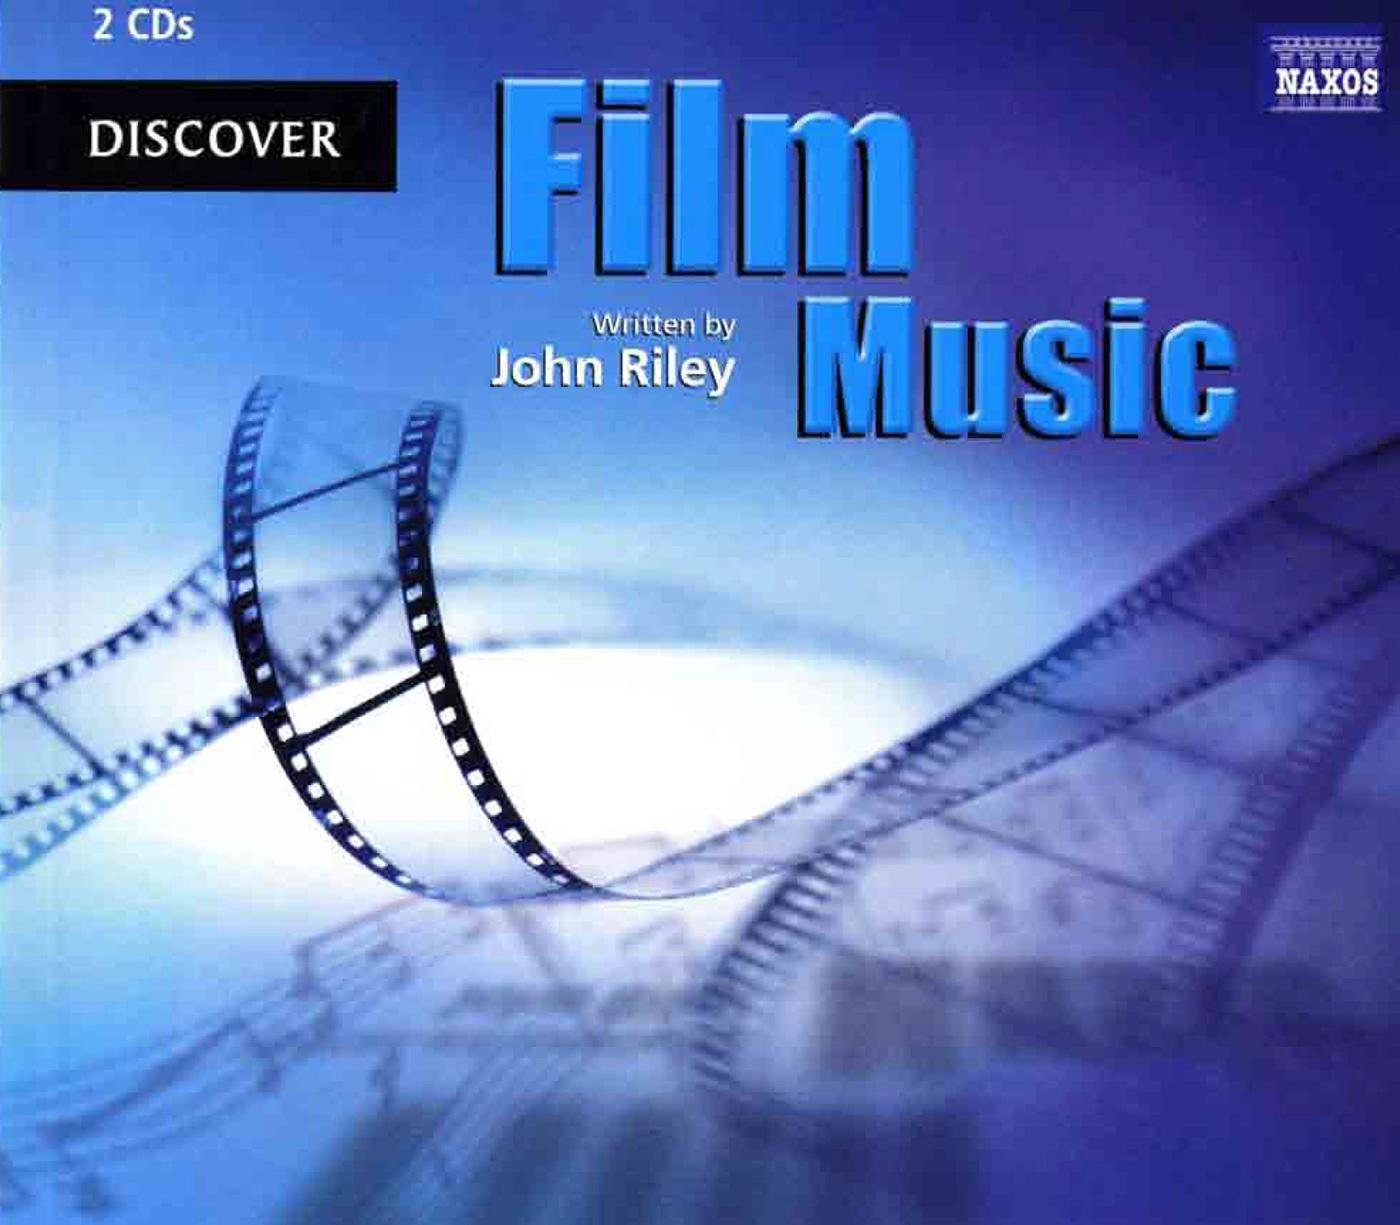 DISCOVER FILM MUSIC